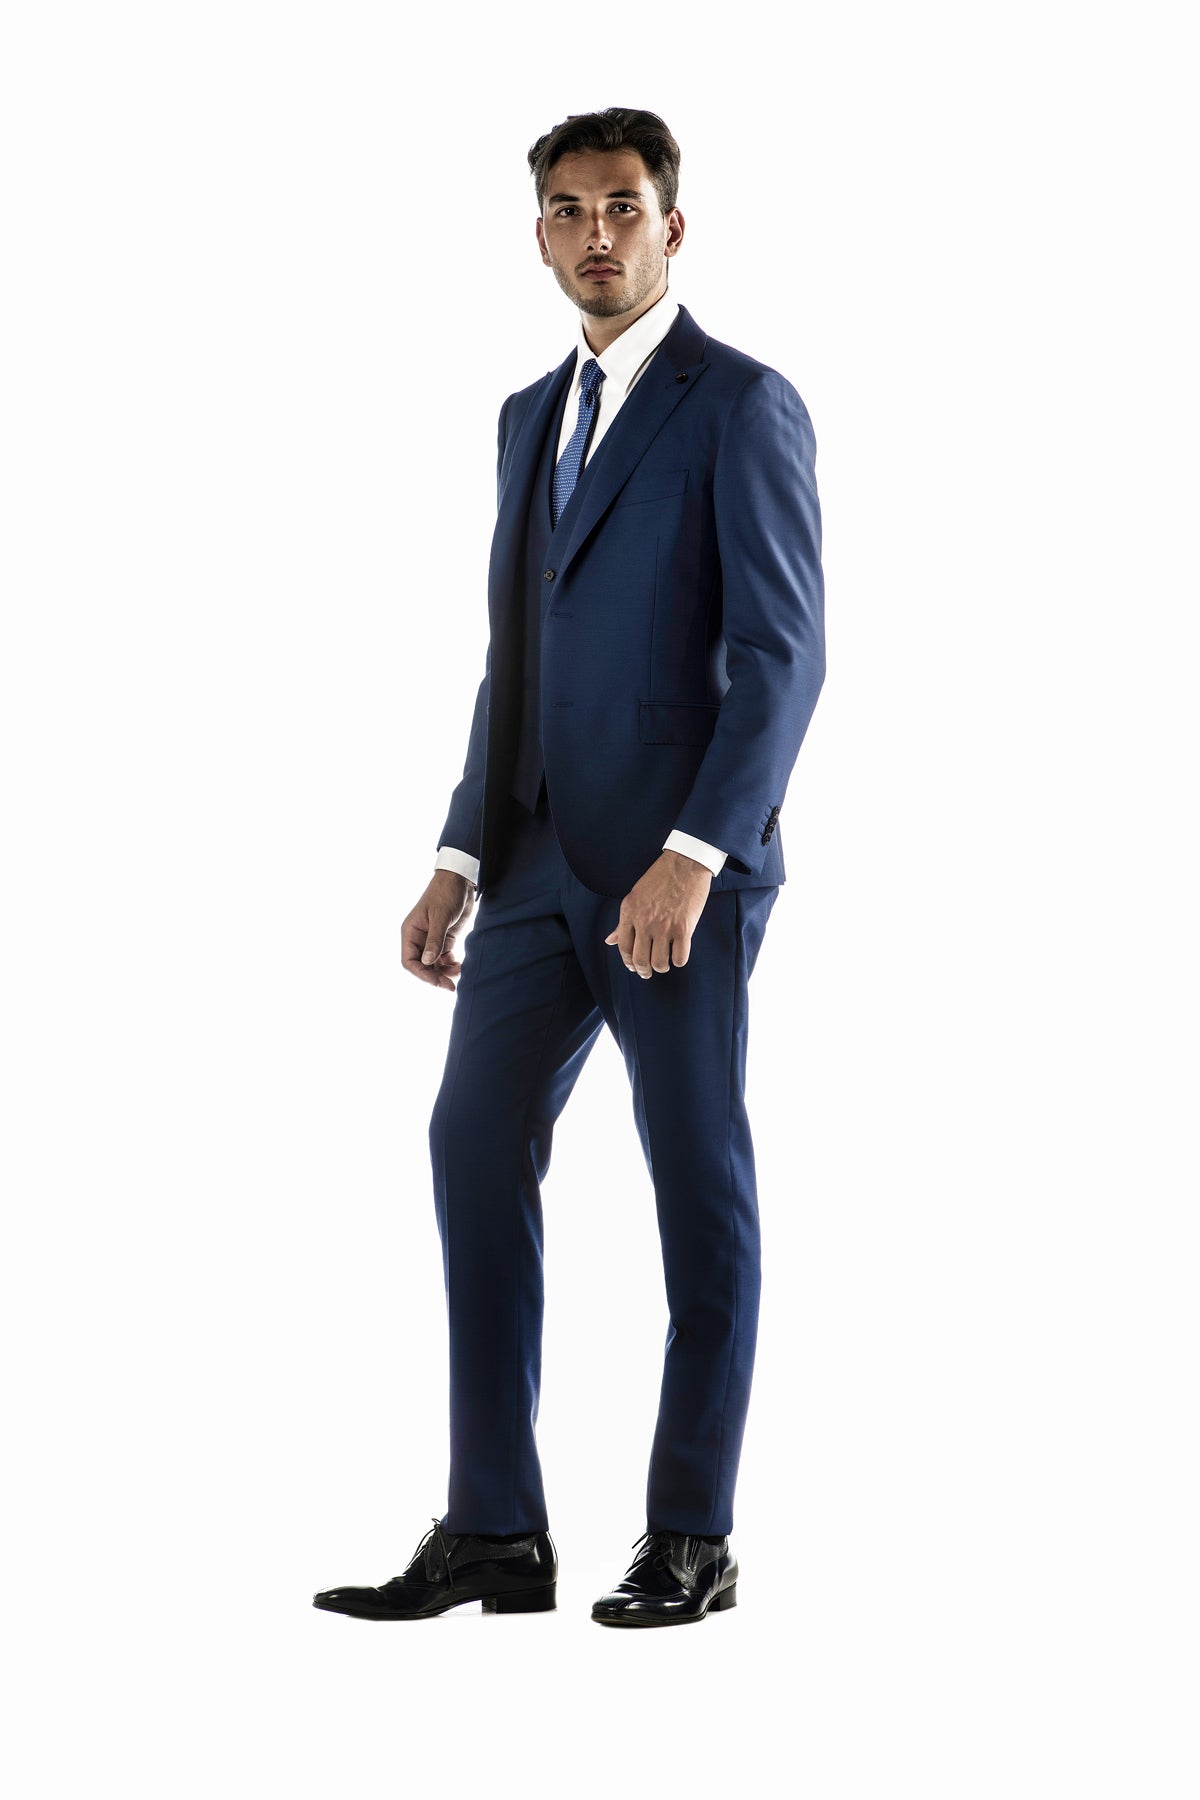 Bluette Patterned Suit with Waistcoat 